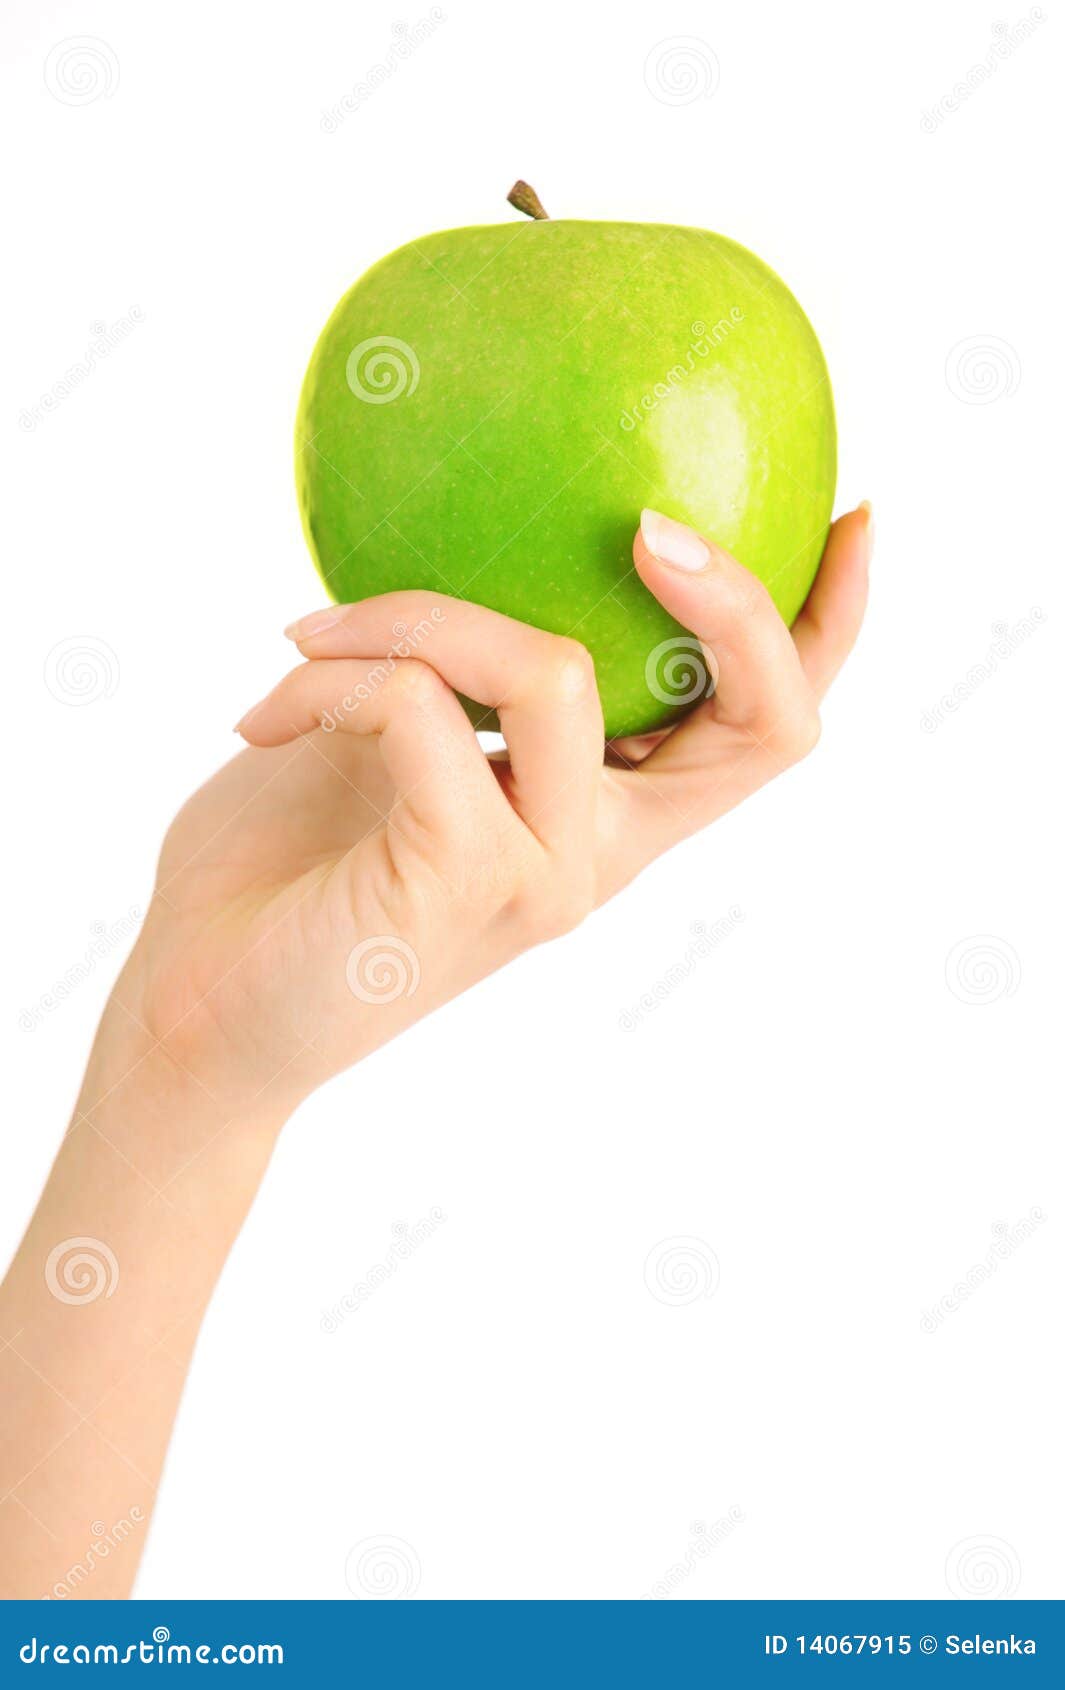 Яблоко в руке